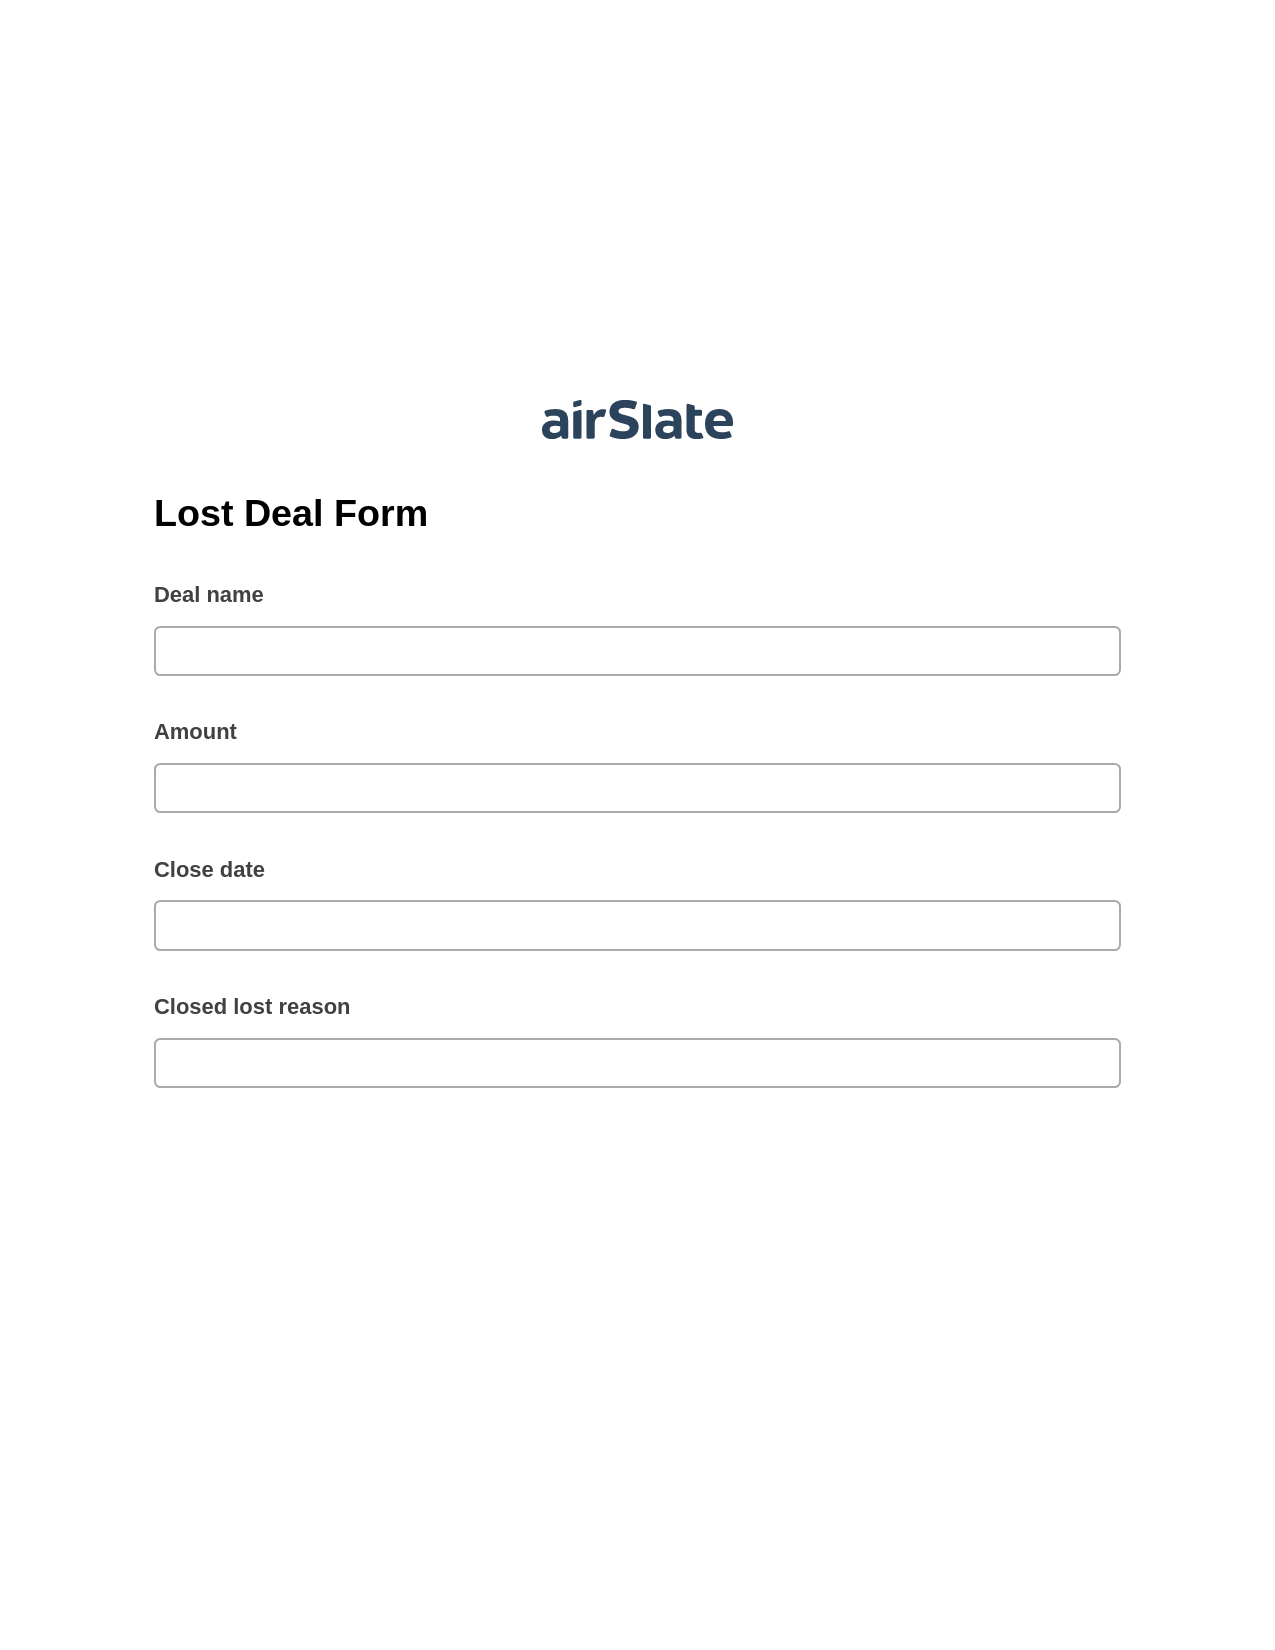 Multirole Lost Deal Form Prefill from NetSuite records, SendGrid send Campaign bot, Slack Notification Postfinish Bot